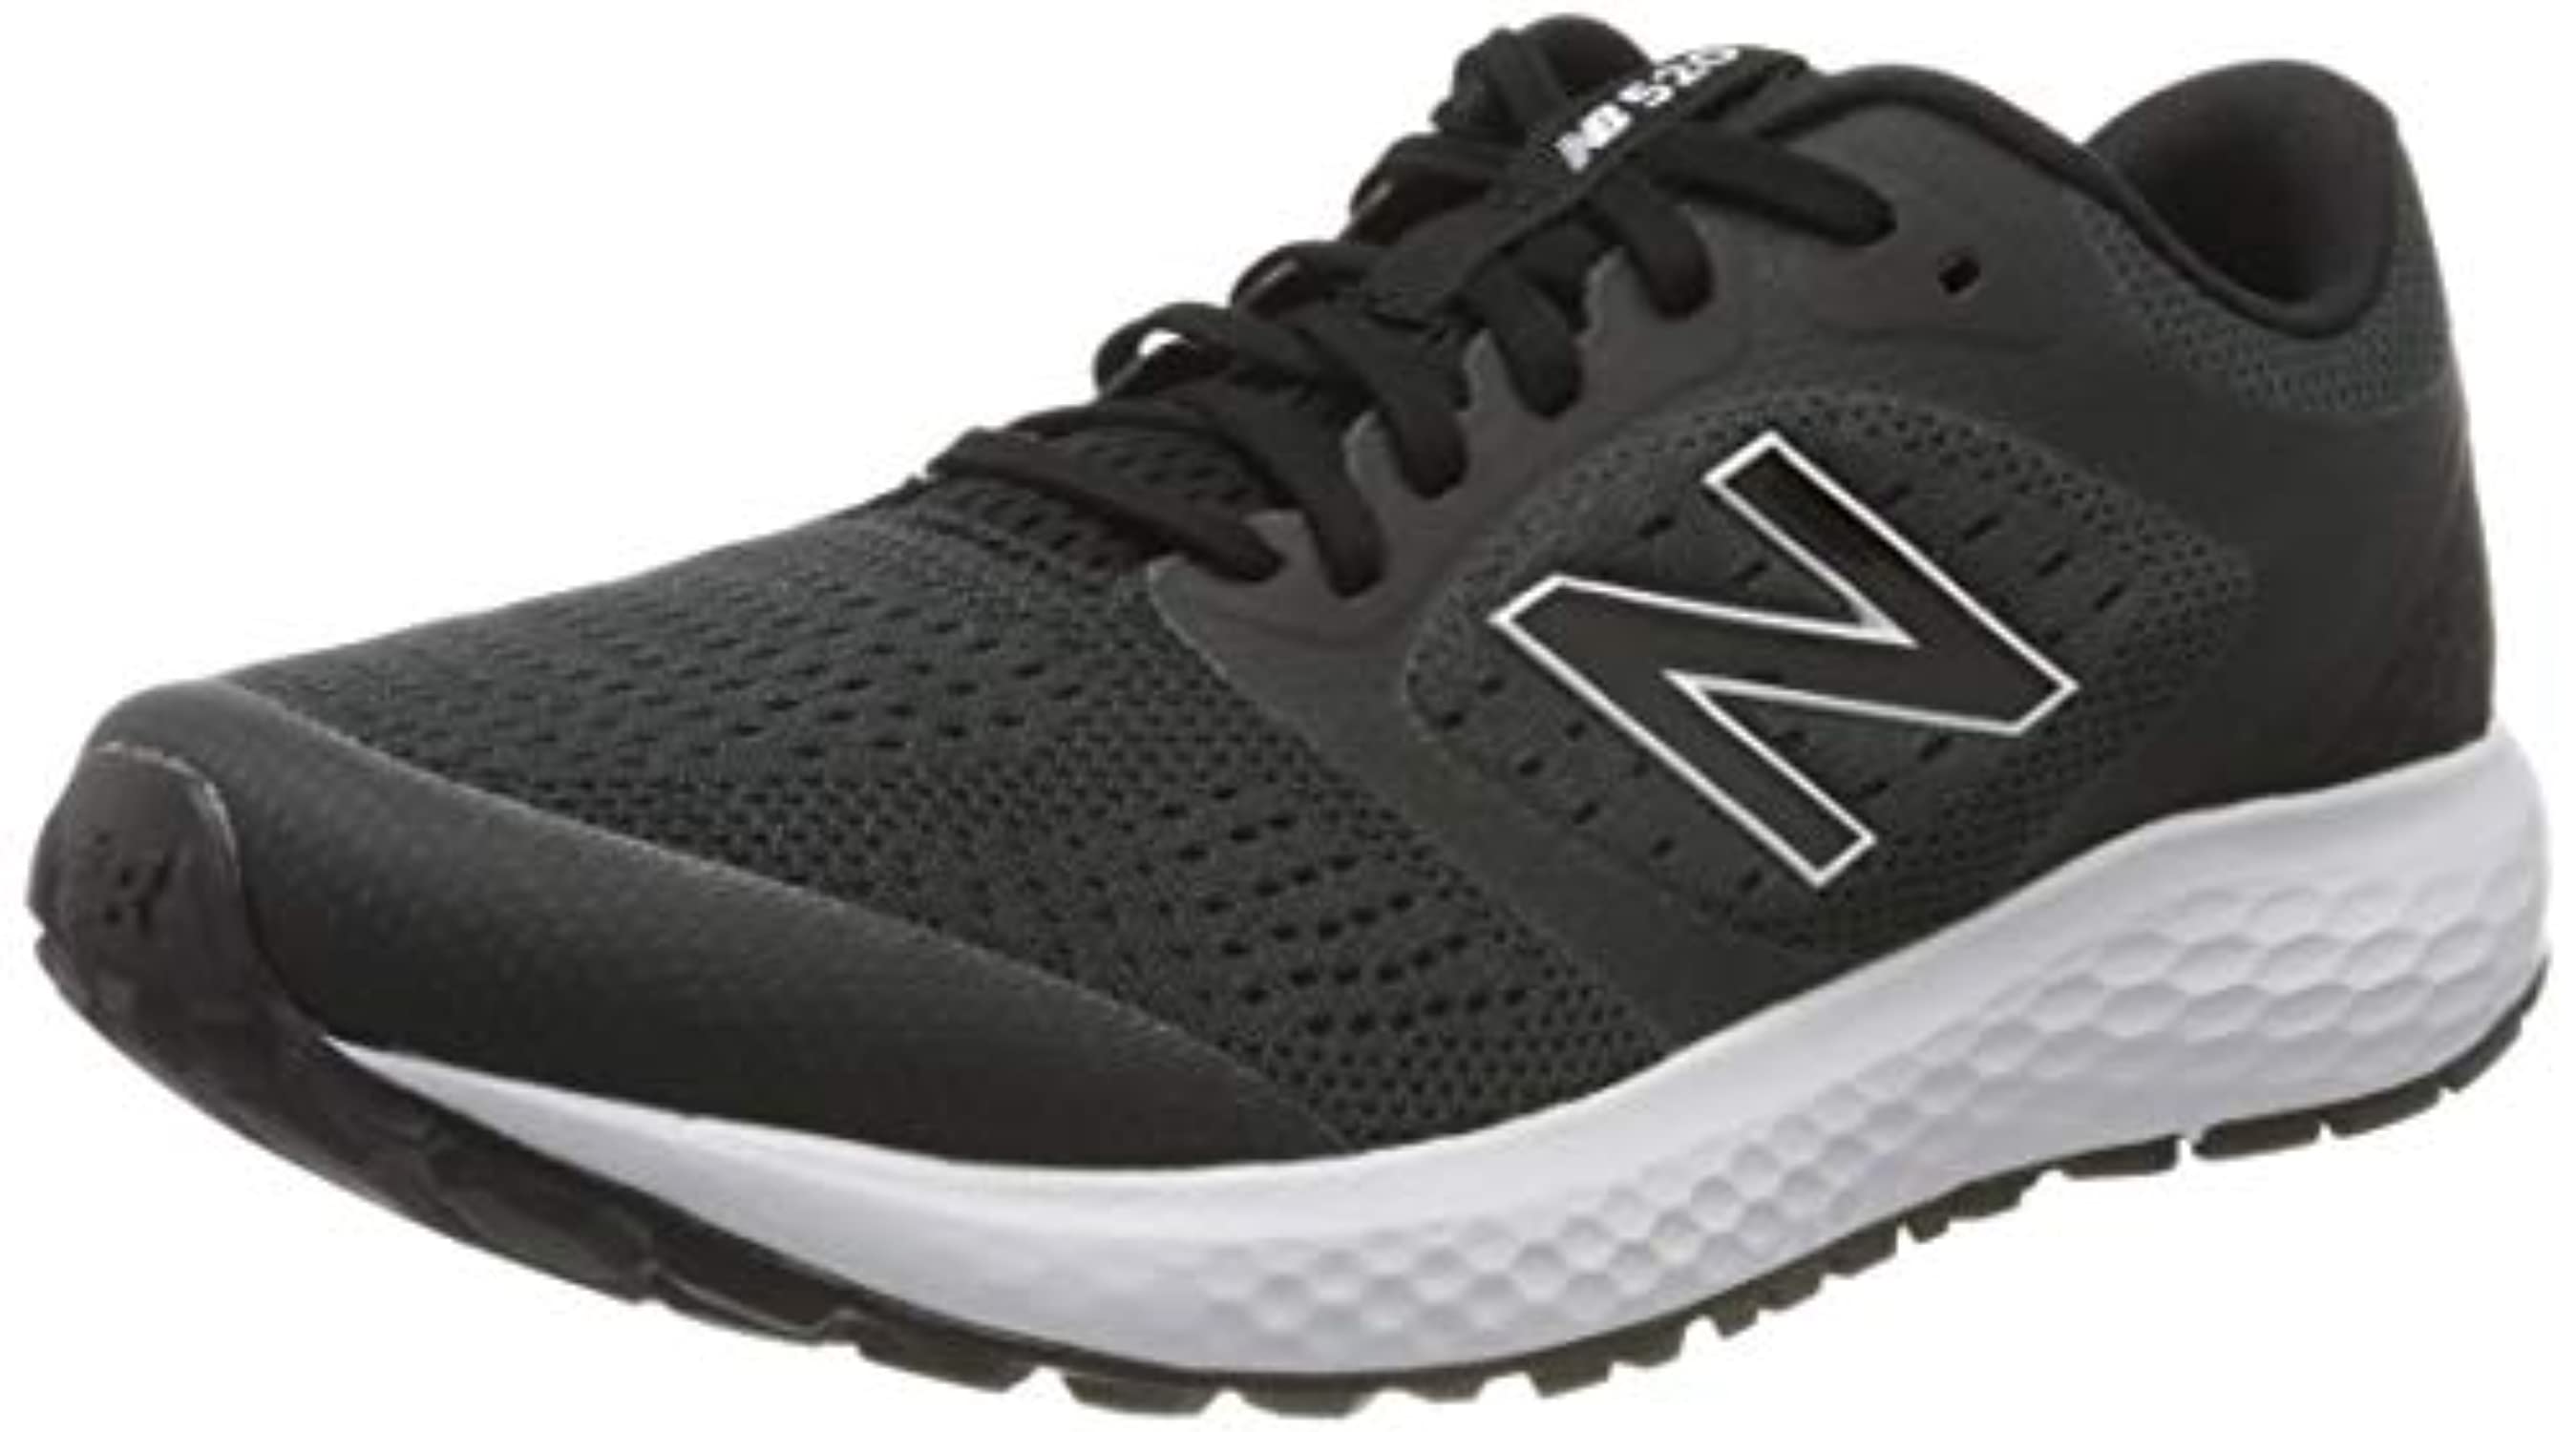 New Balance Men's 520 V6 Running Shoe, Black/Orca, 12 M US - image 1 of 5